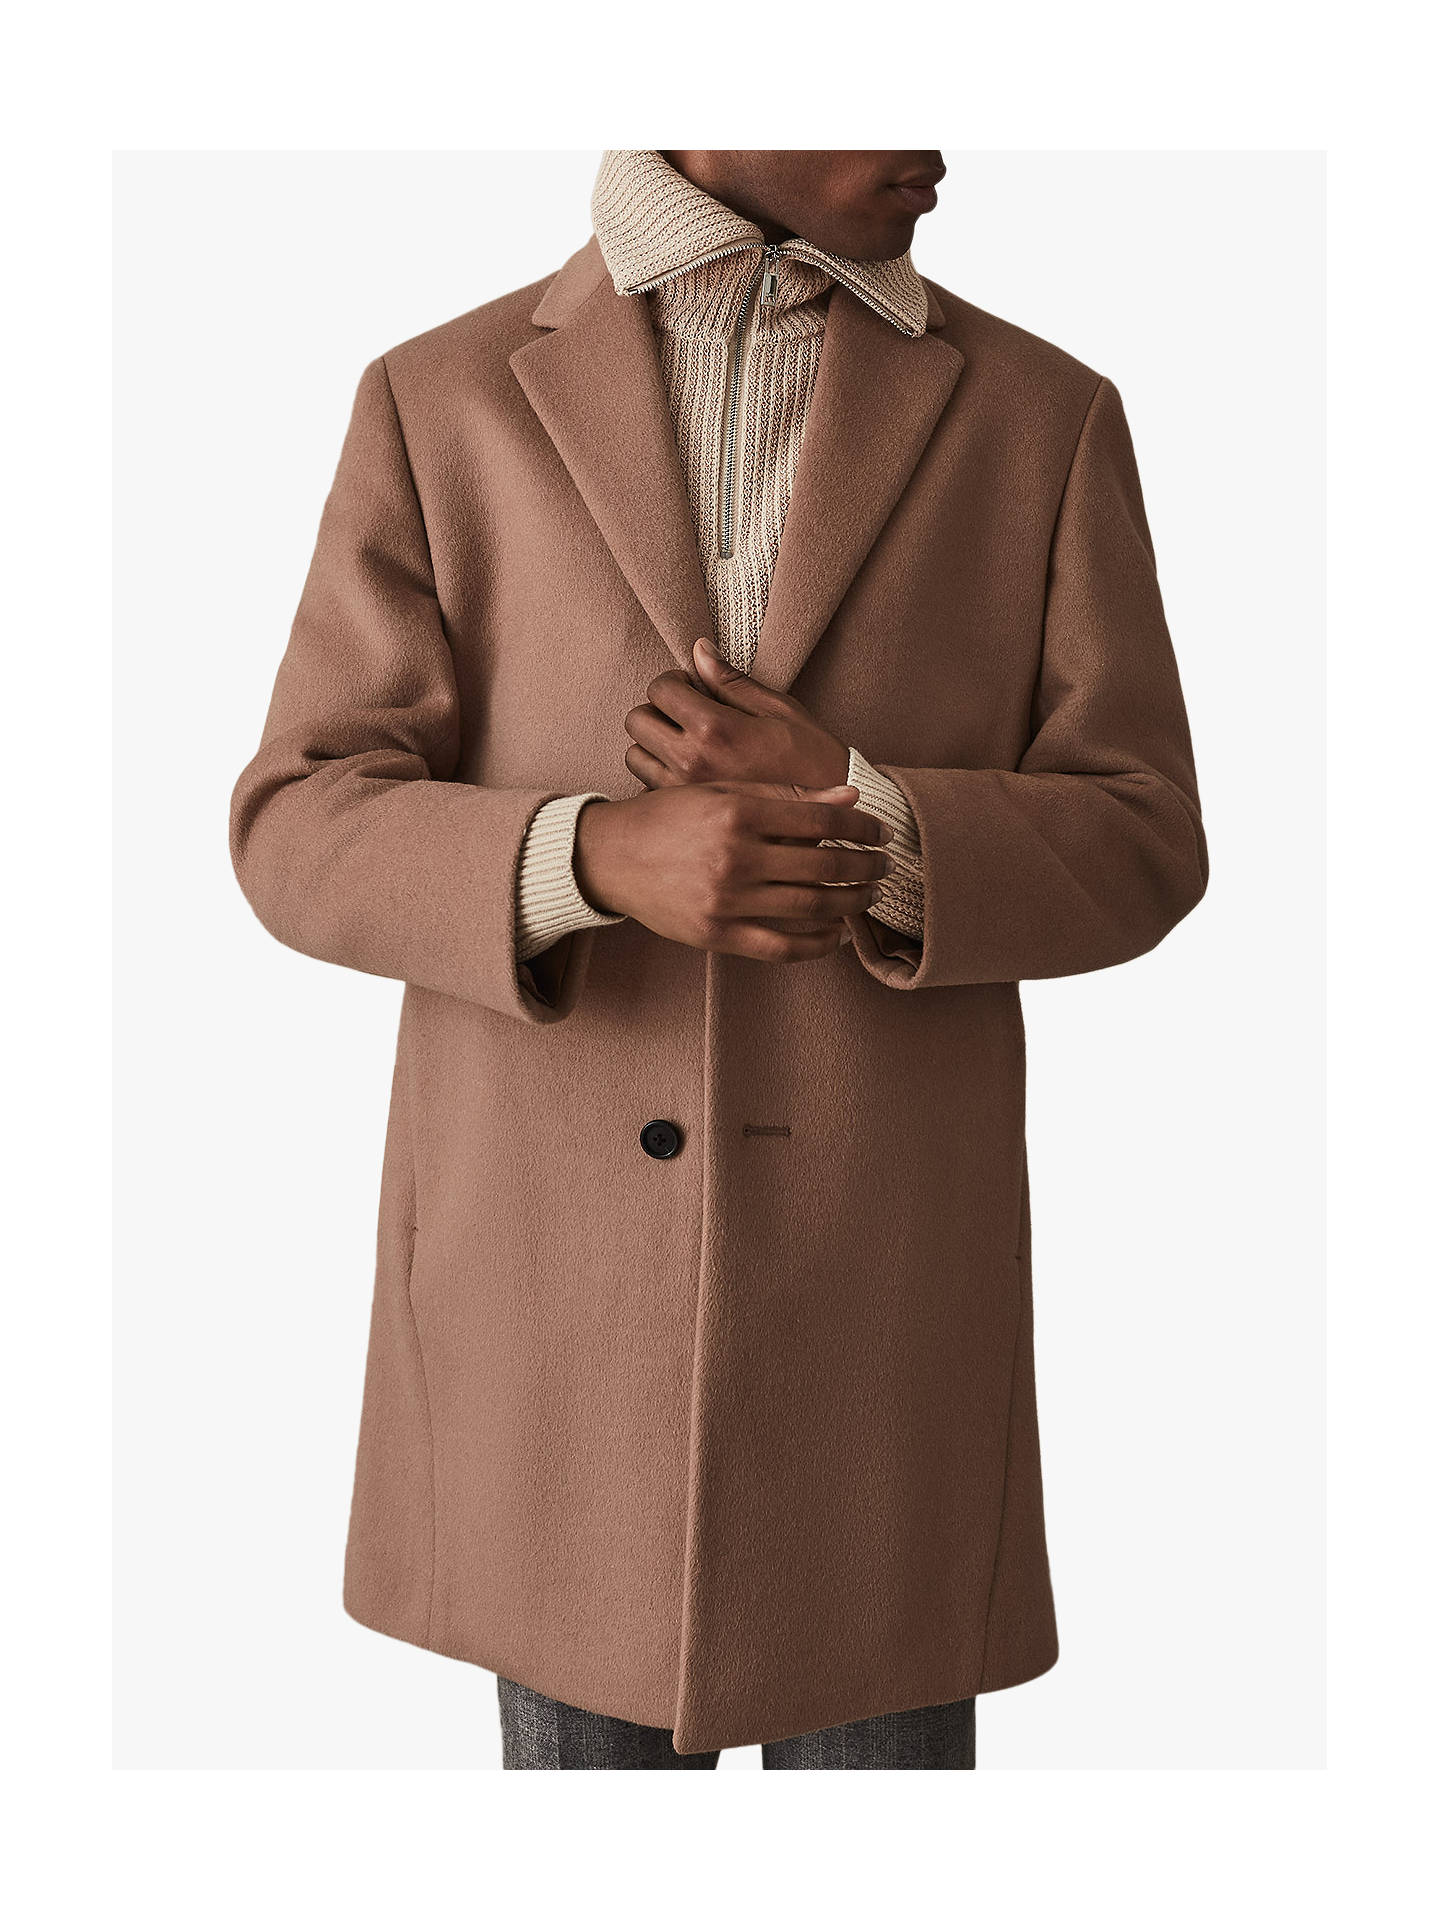 Reiss London Wool Blend Overcoat, Soft Pink at John Lewis & Partners